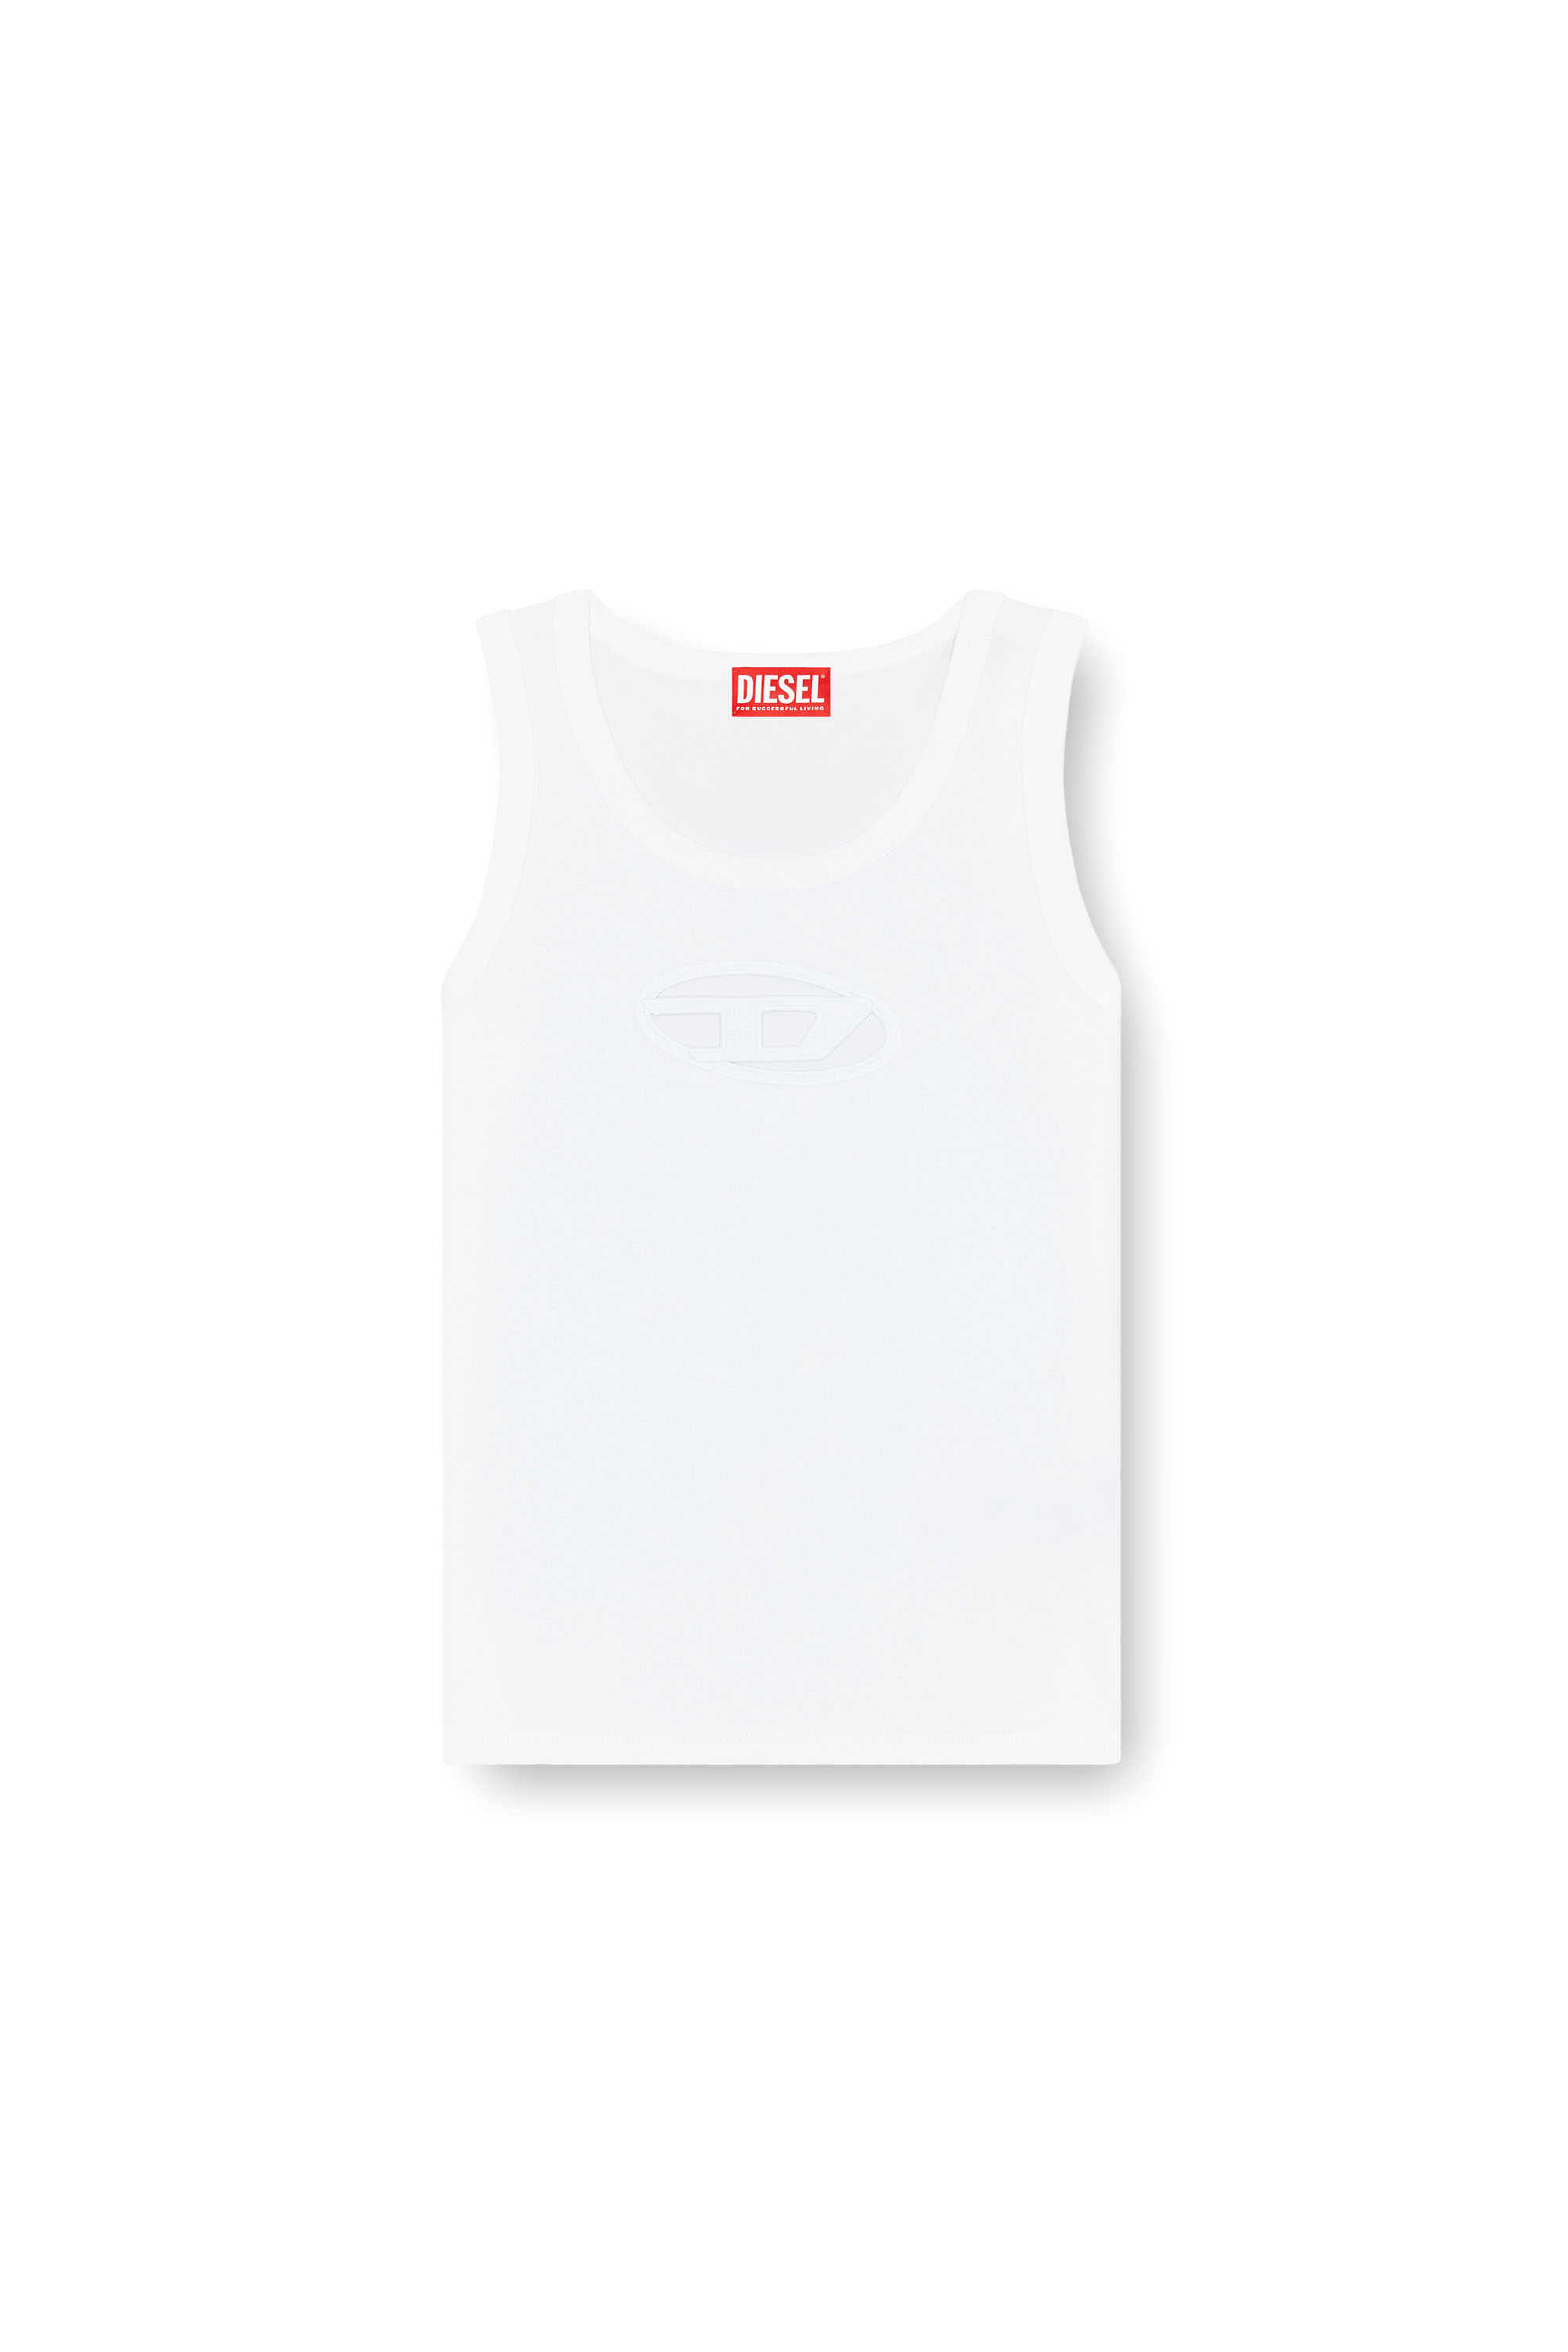 Diesel - T-LYNYS-OD, Mujer Camiseta sin mangas con logotipo Oval D recortado in Blanco - Image 3